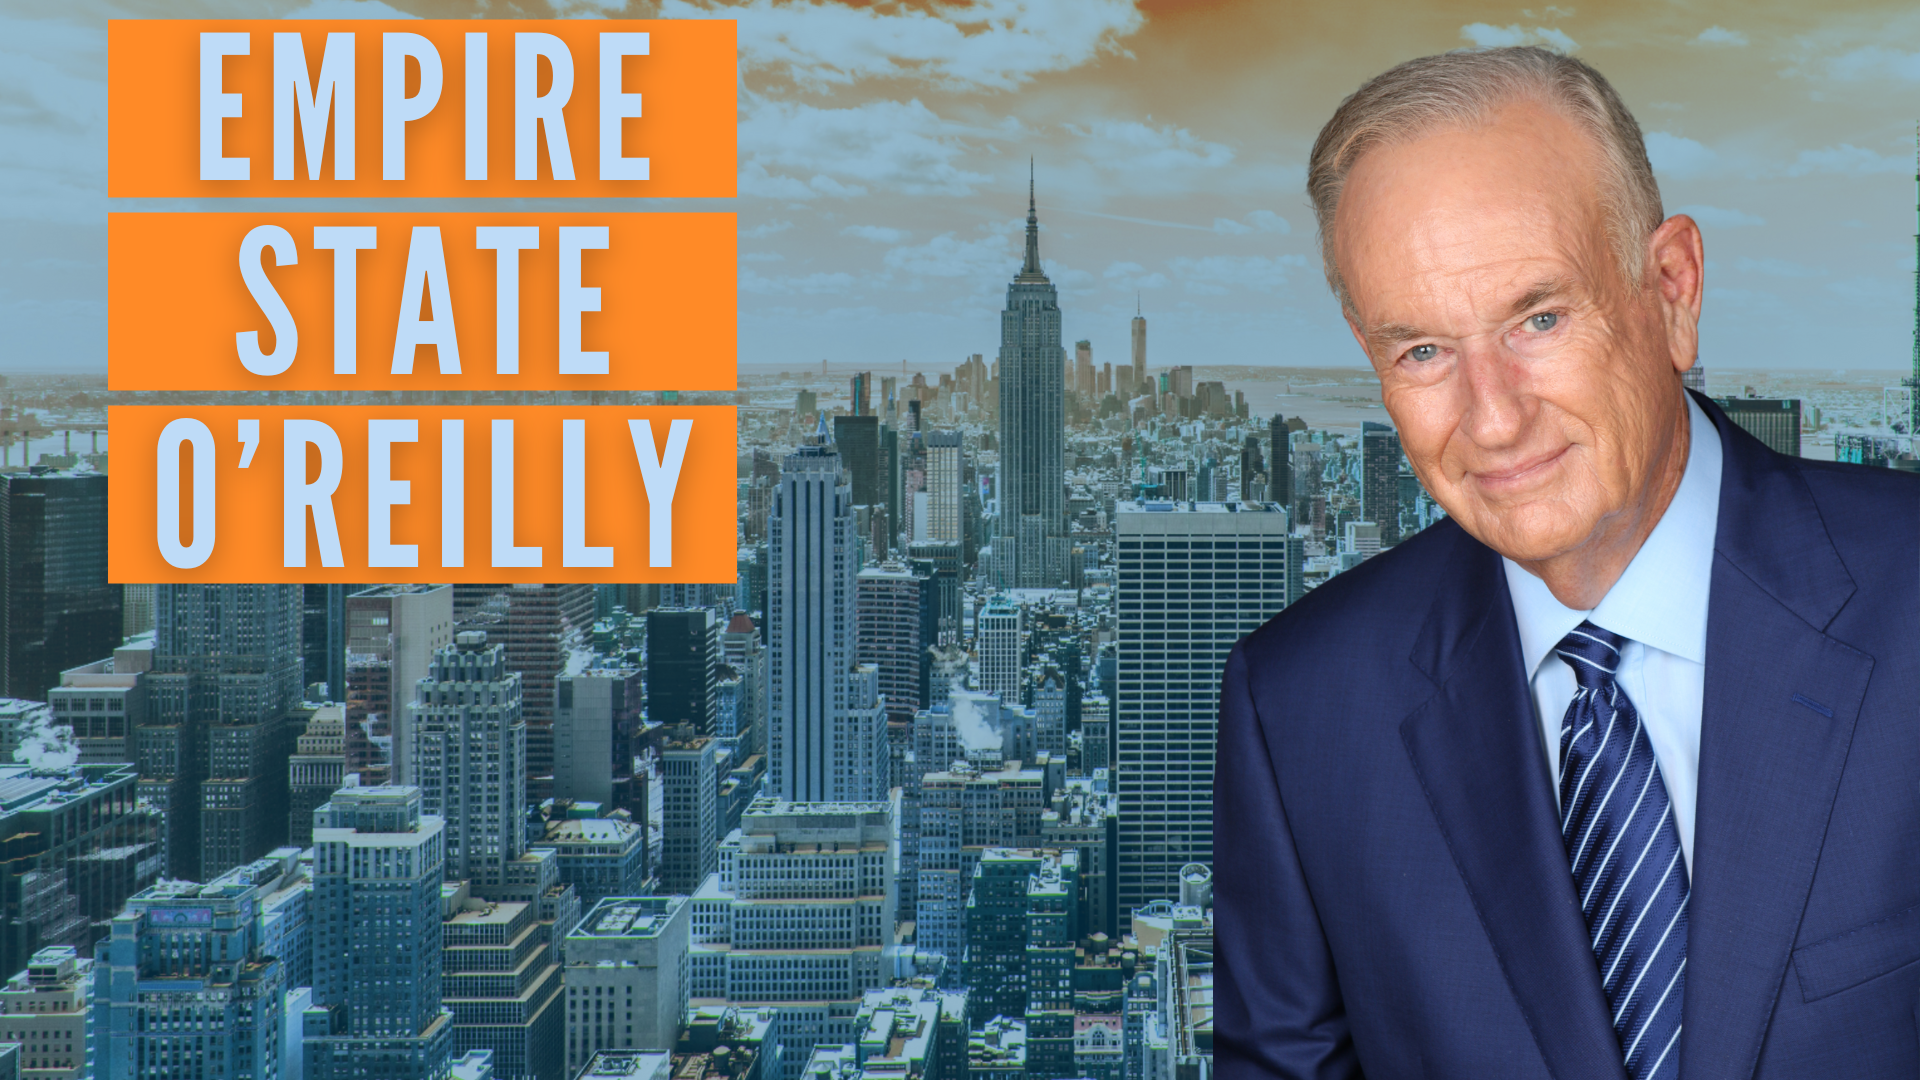 Empire State O'Reilly: Andrew Cuomo's Future